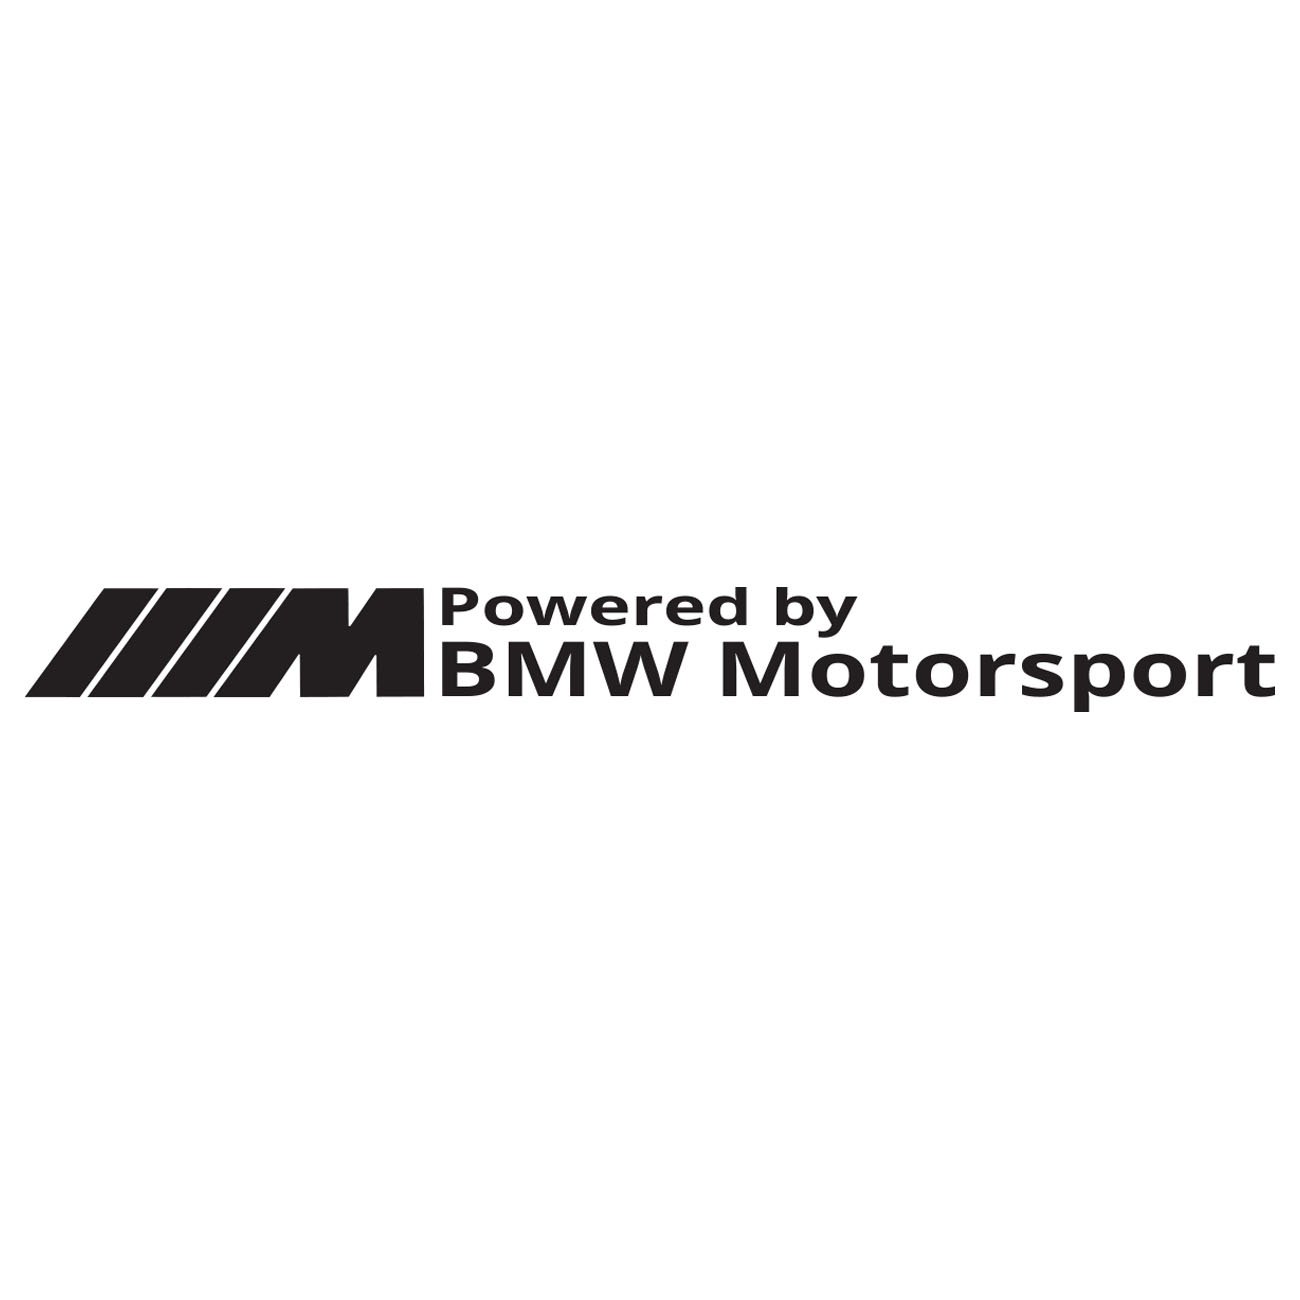 Powered by BMW Motorsport